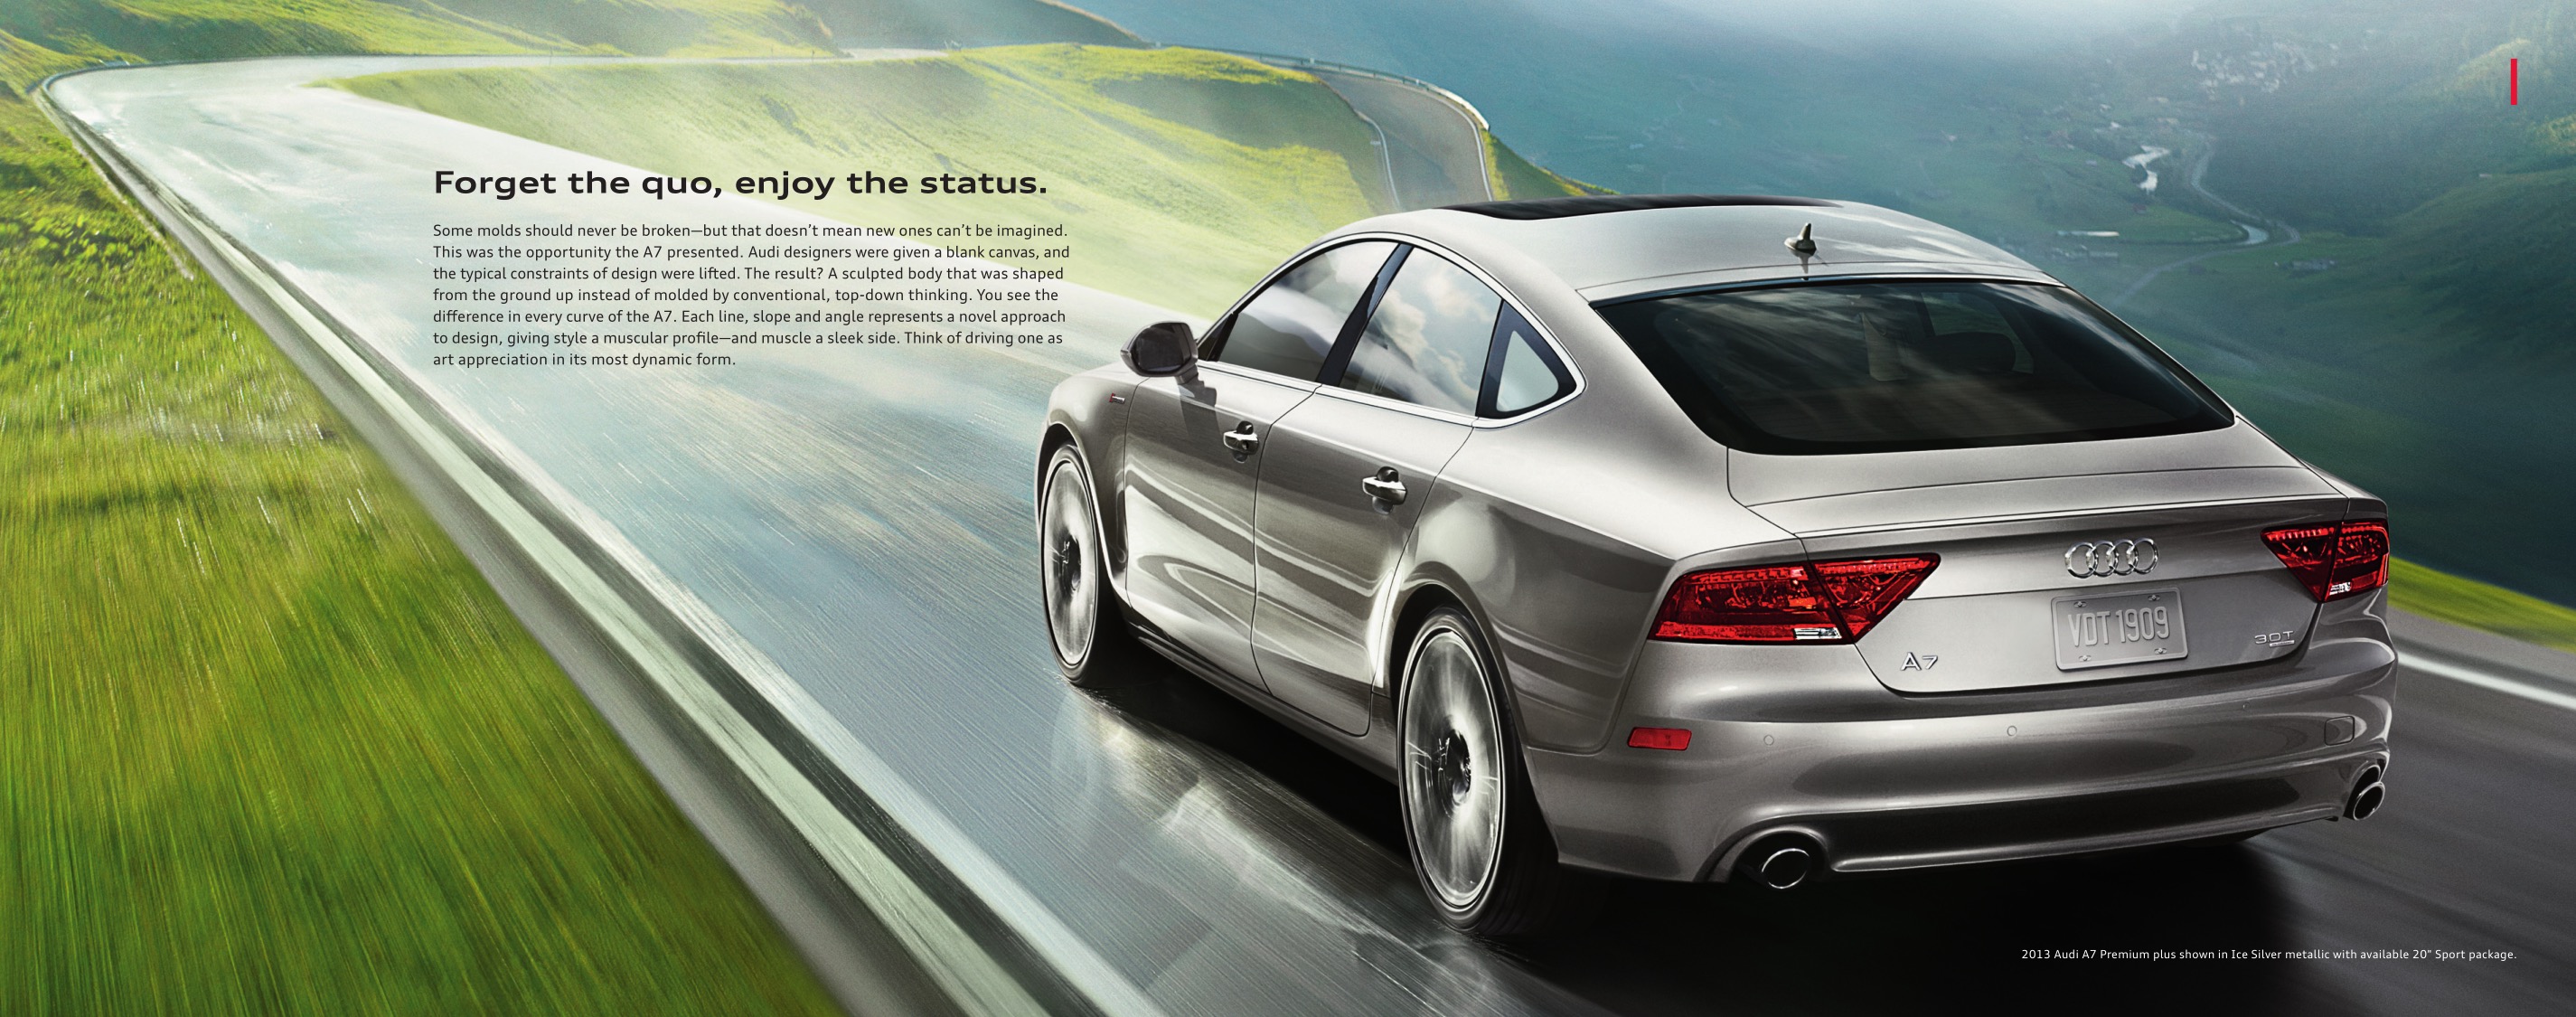 2013 Audi A7 Brochure Page 5